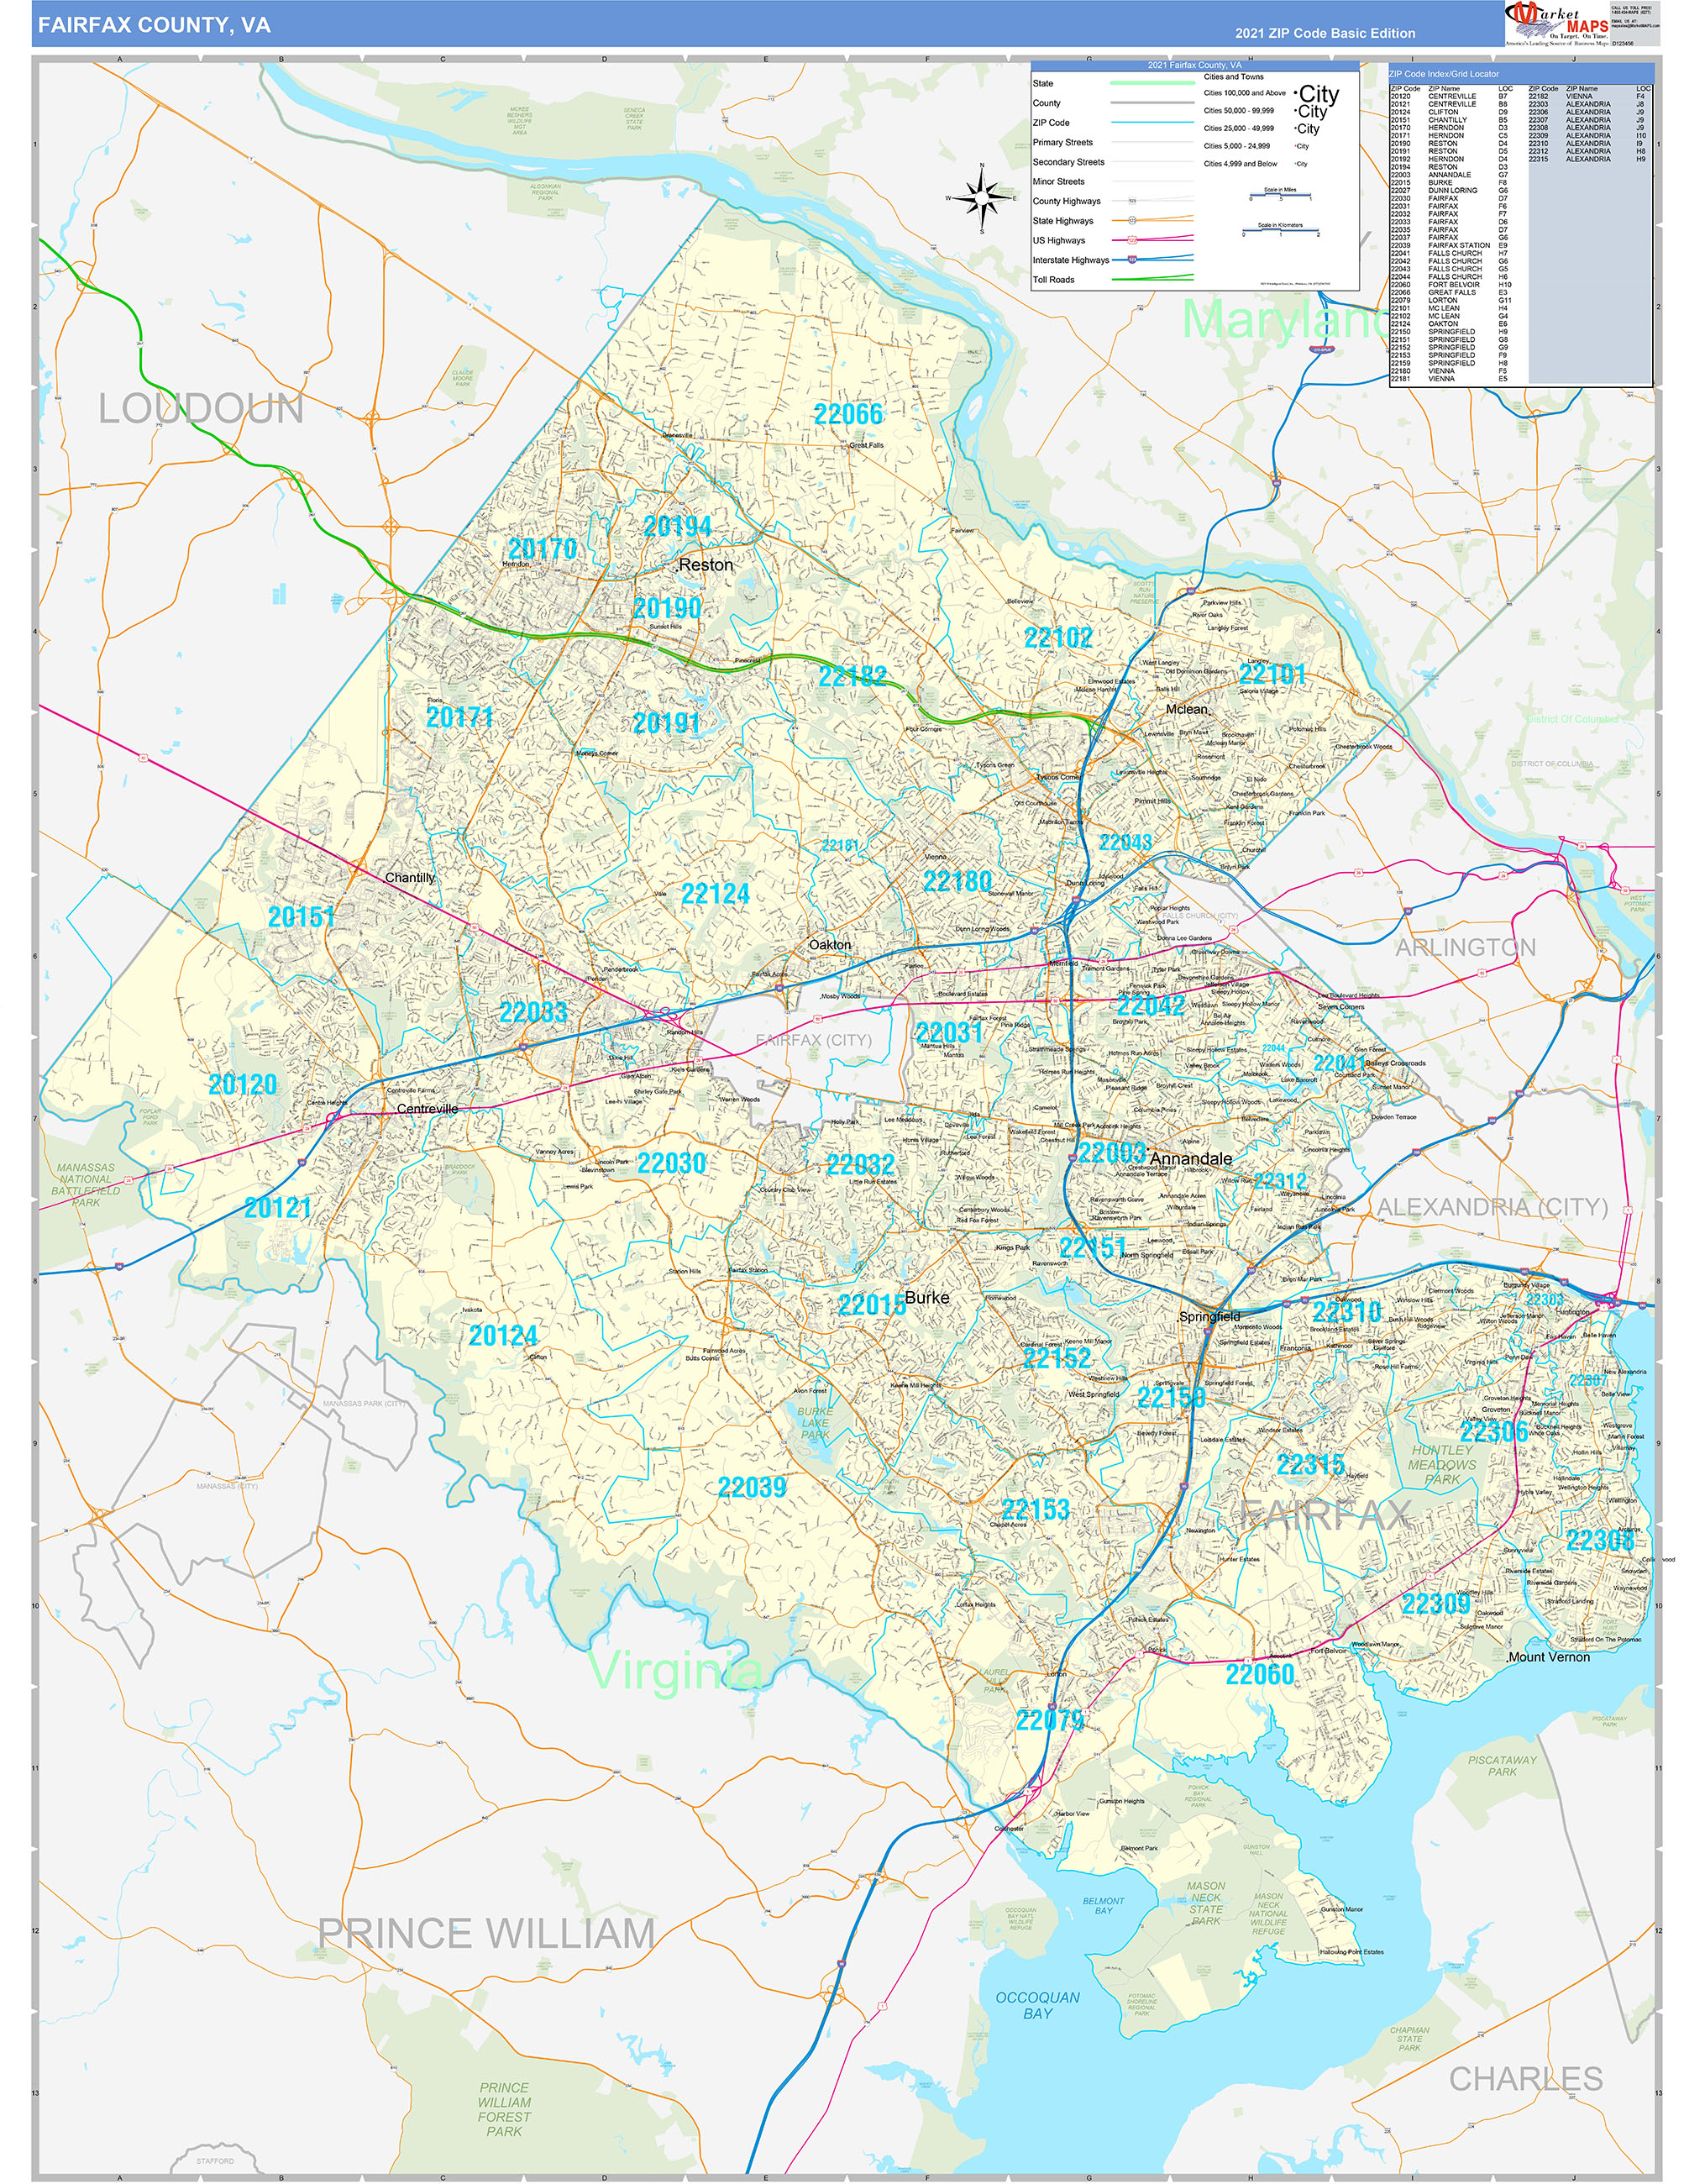 fairfax-county-va-zip-code-wall-map-basic-style-by-marketmaps-mapsales